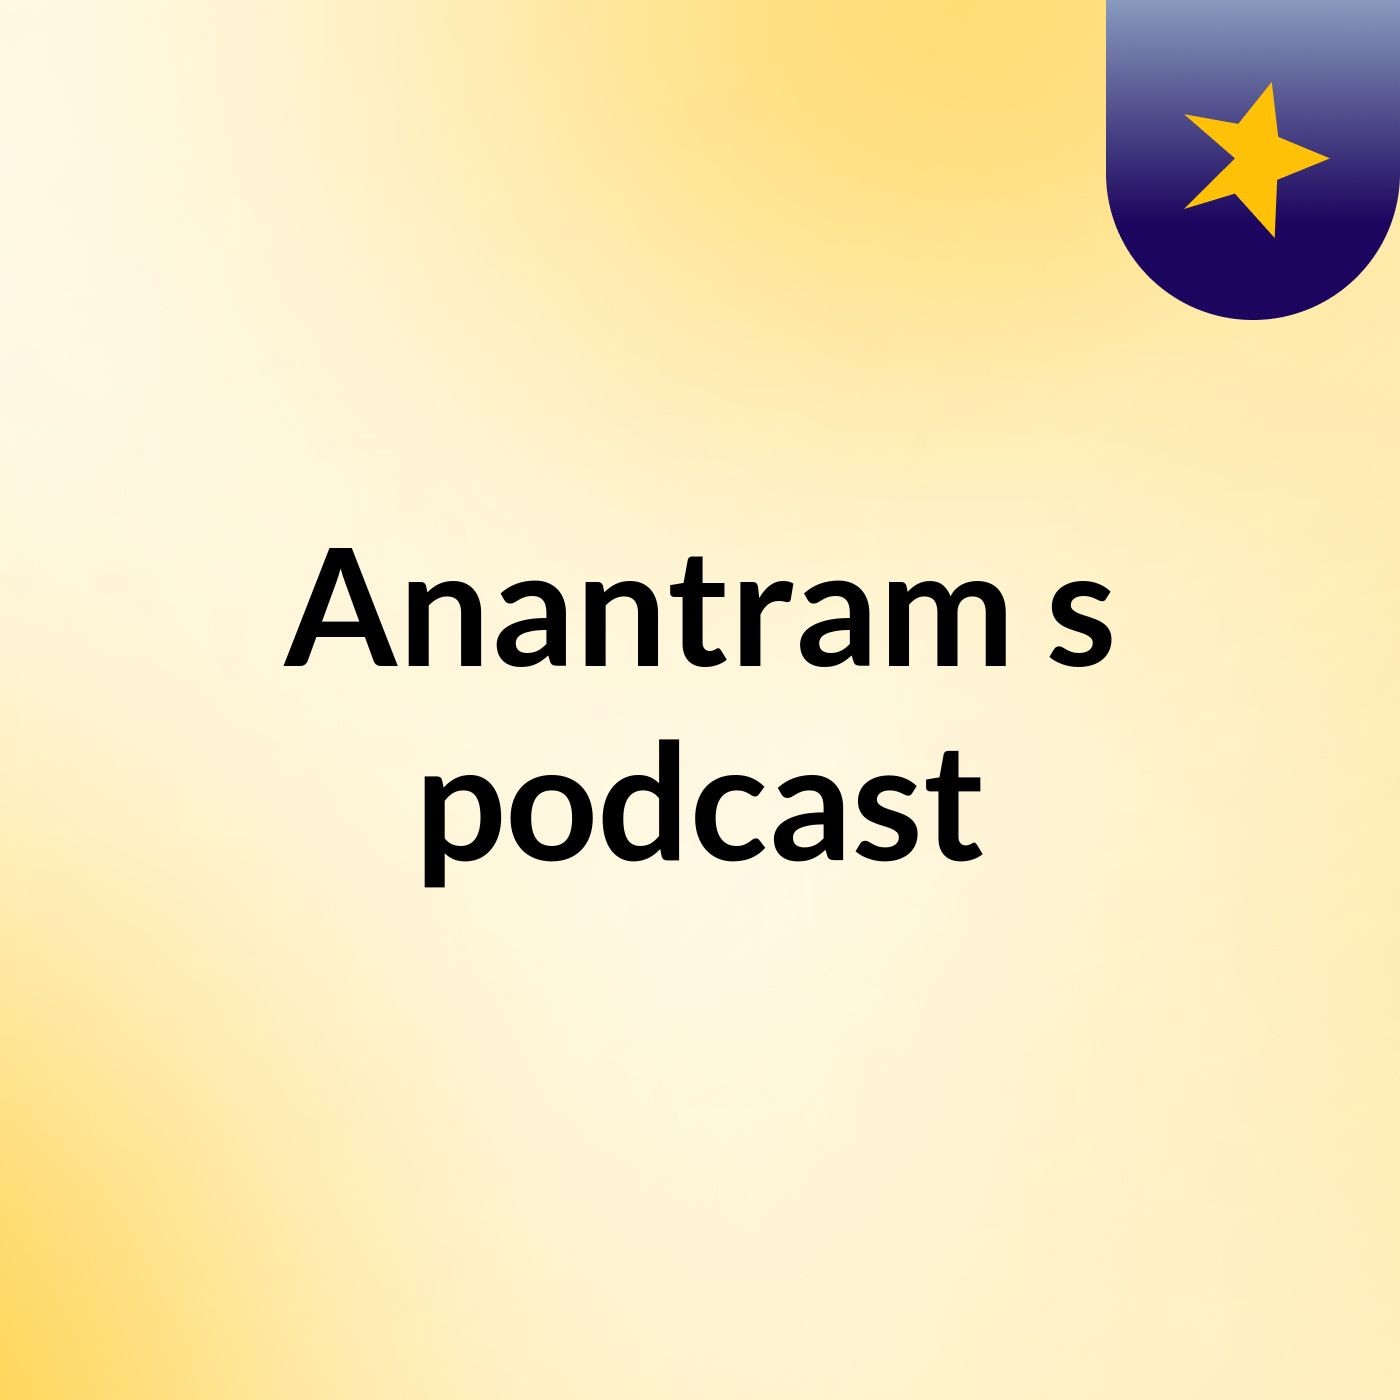 Anantram's podcast